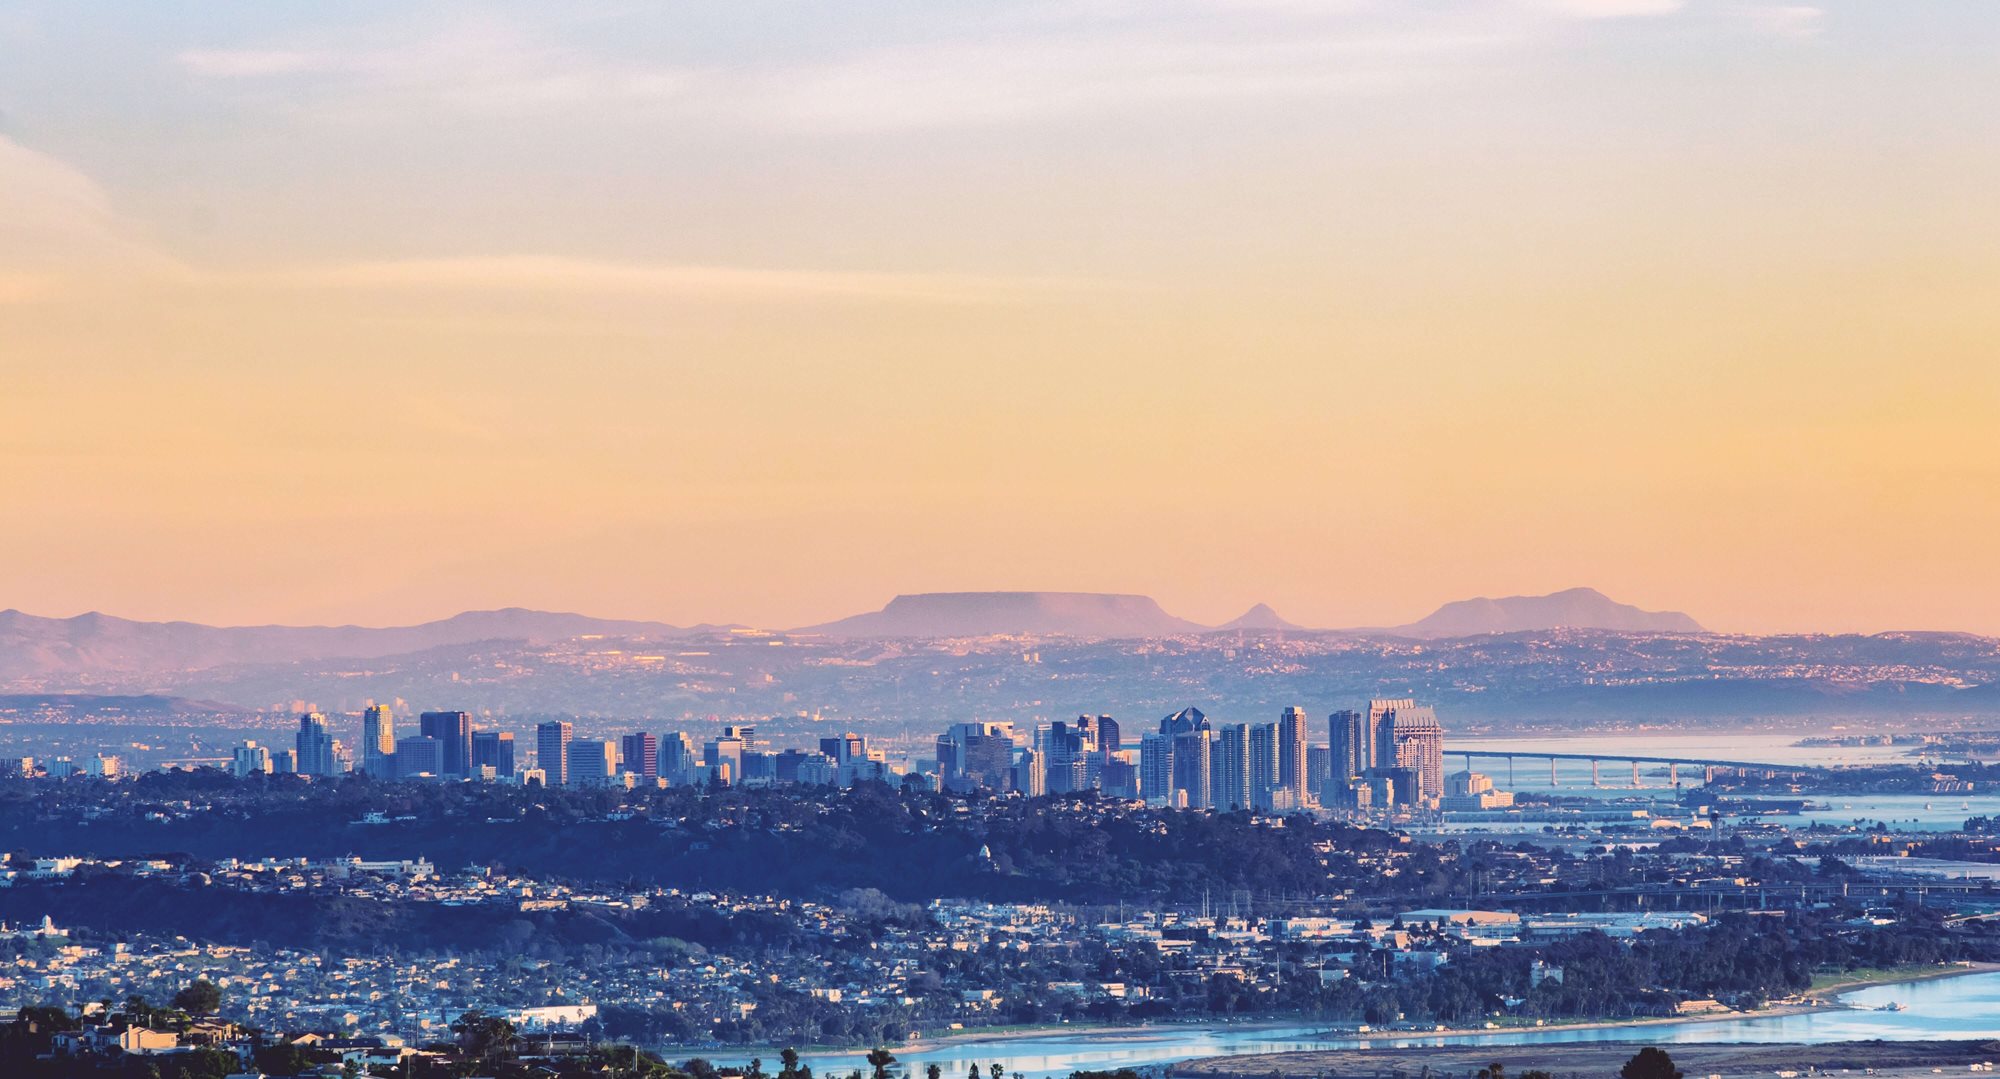 Image of San Diego skyline